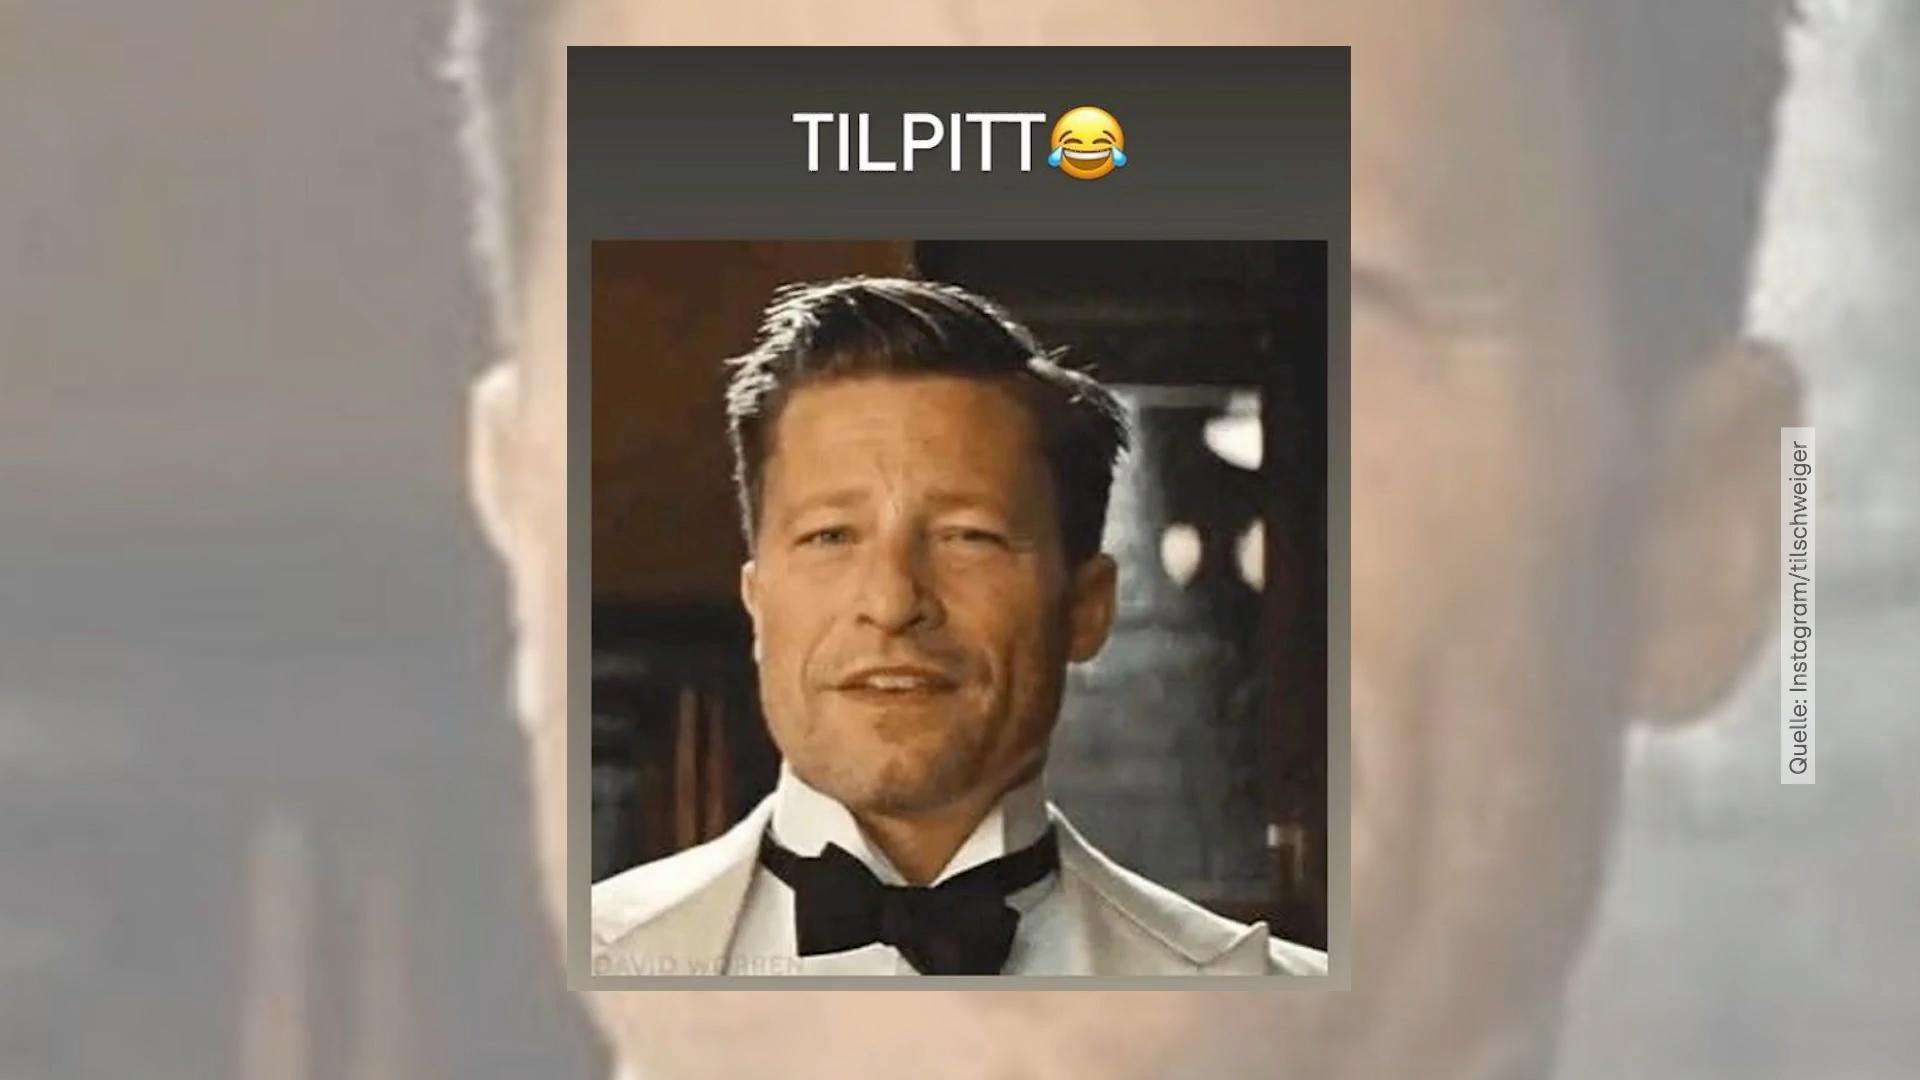 Til Schweiger postest sich im Brad Pitt Style „Til Pitt"